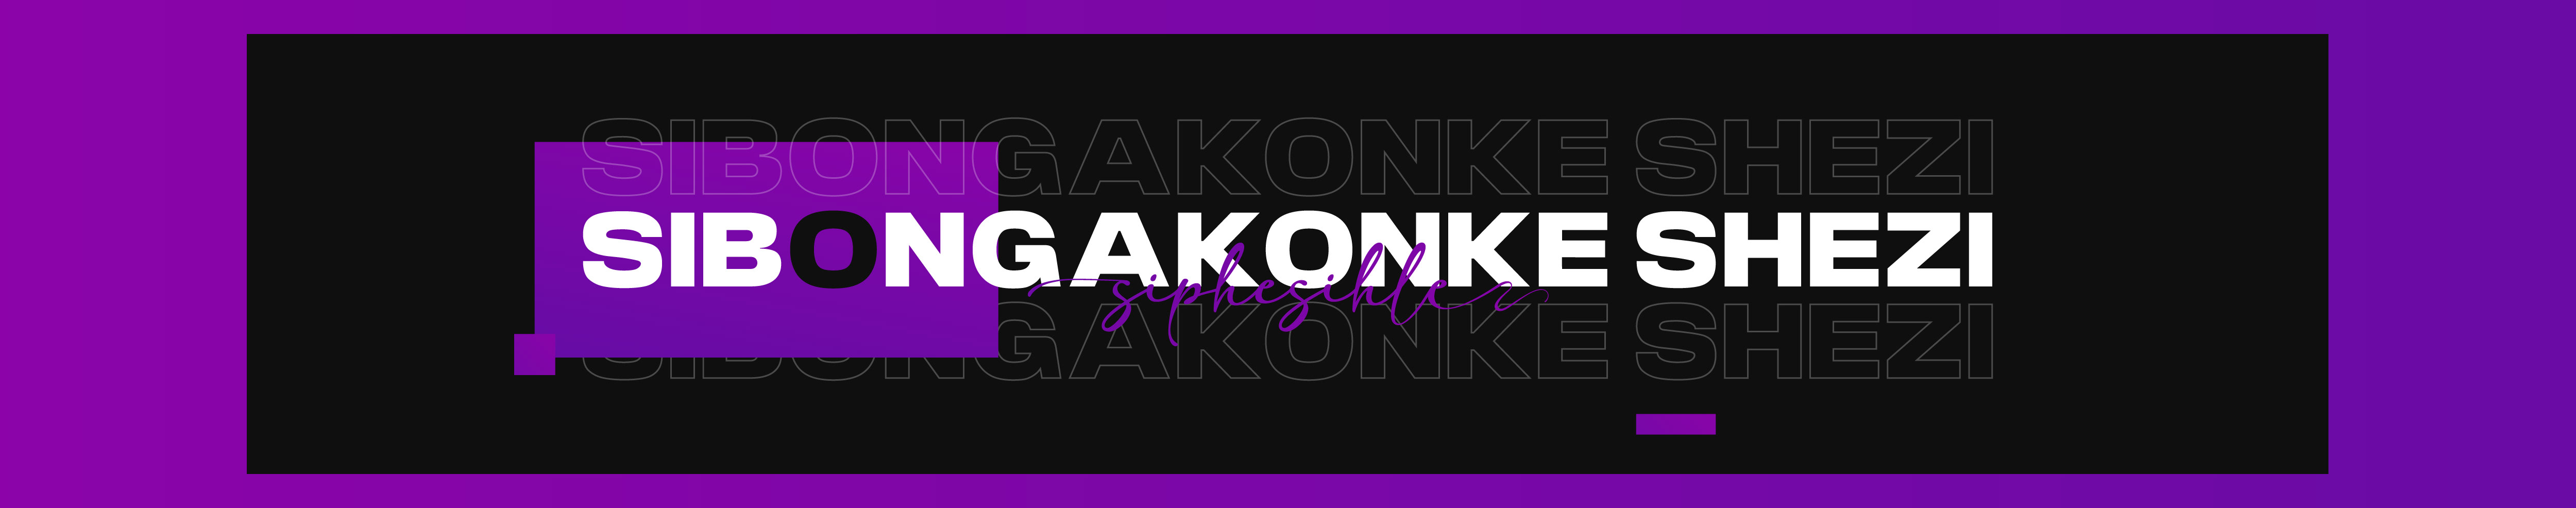 Sibongakonke Shezi's profile banner